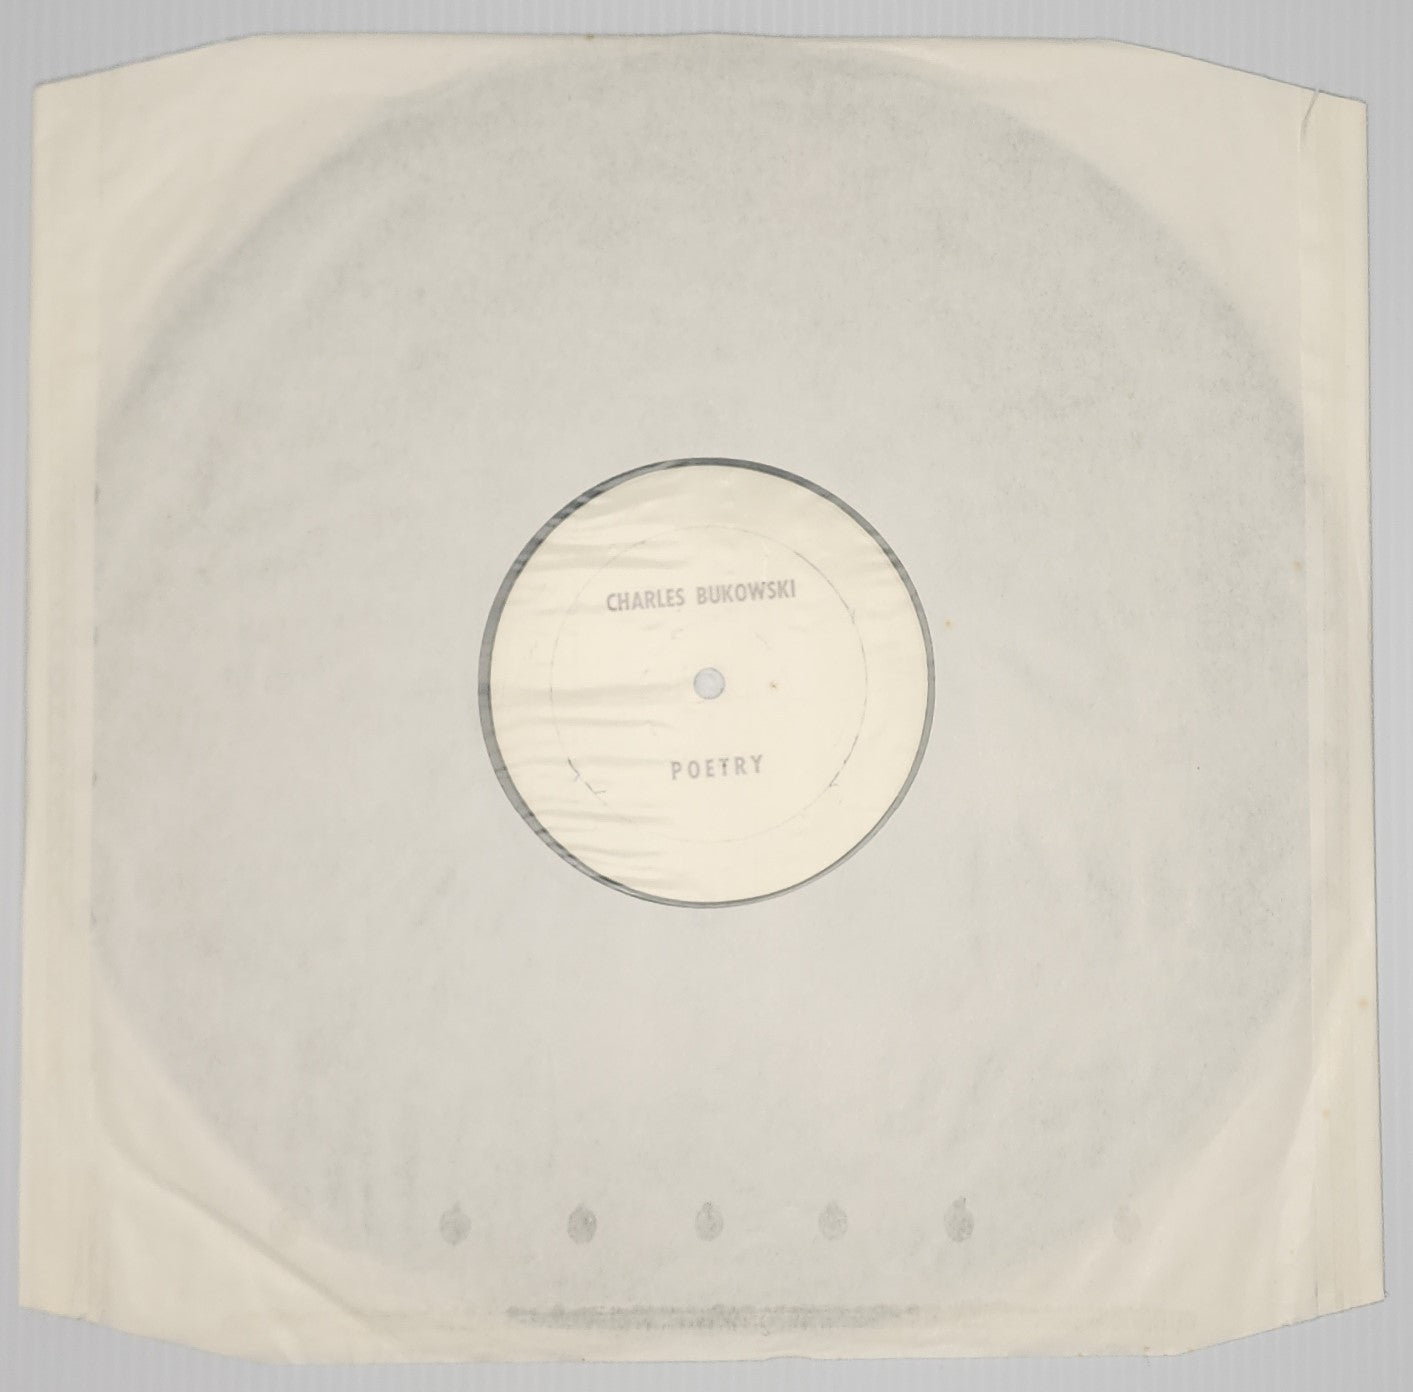 Extremely Rare Vinyl LP, Still in Shrink Wrap: Poetry – Charles Bukowski Steve Richmon (1968)